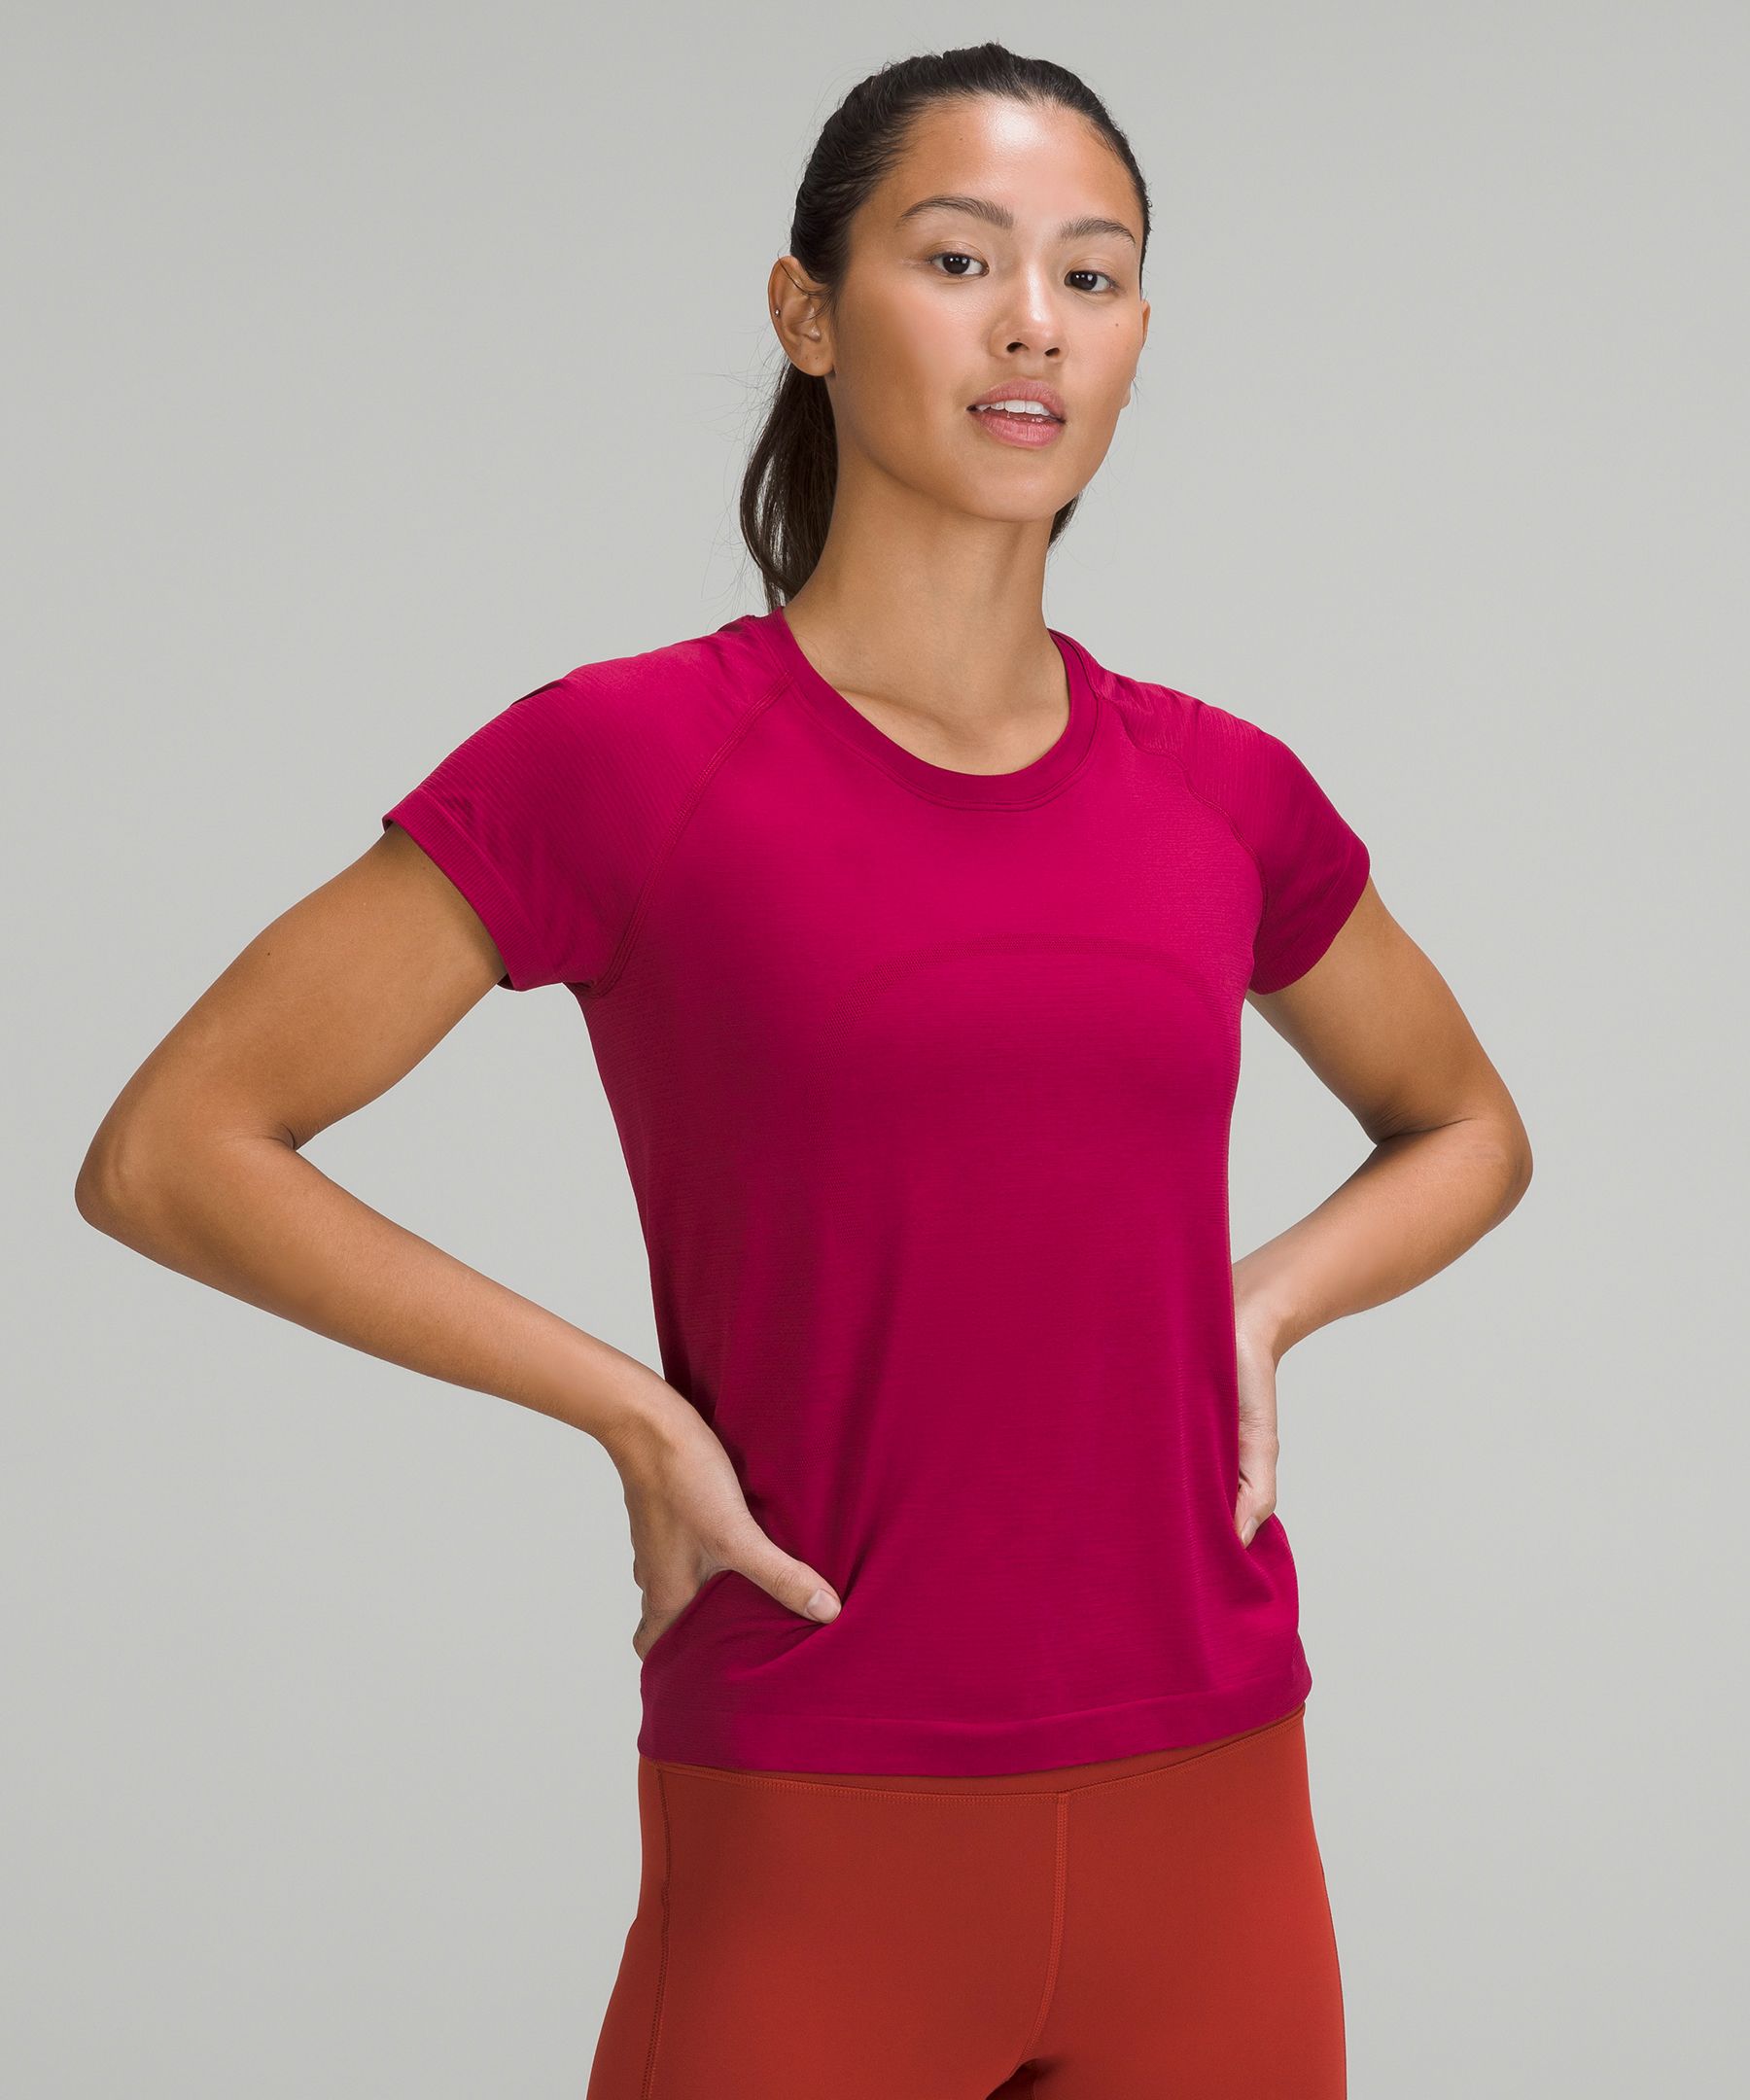 Lululemon athletica Swiftly Tech Short-Sleeve Shirt 2.0 *Race Length, Women's Short Sleeve Shirts & Tee's